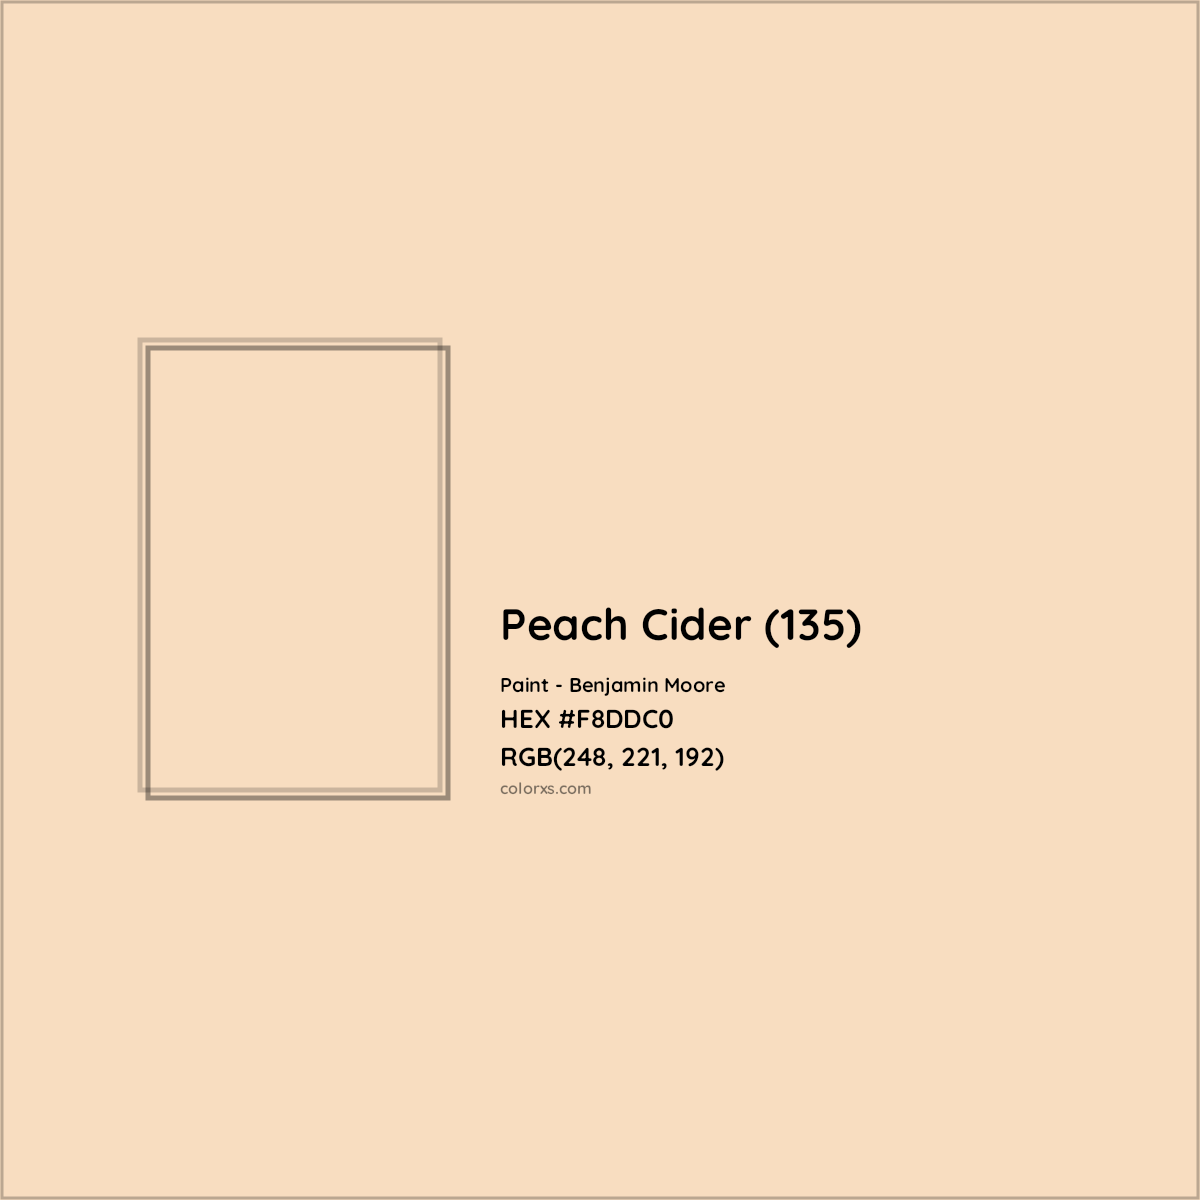 HEX #F8DDC0 Peach Cider (135) Paint Benjamin Moore - Color Code